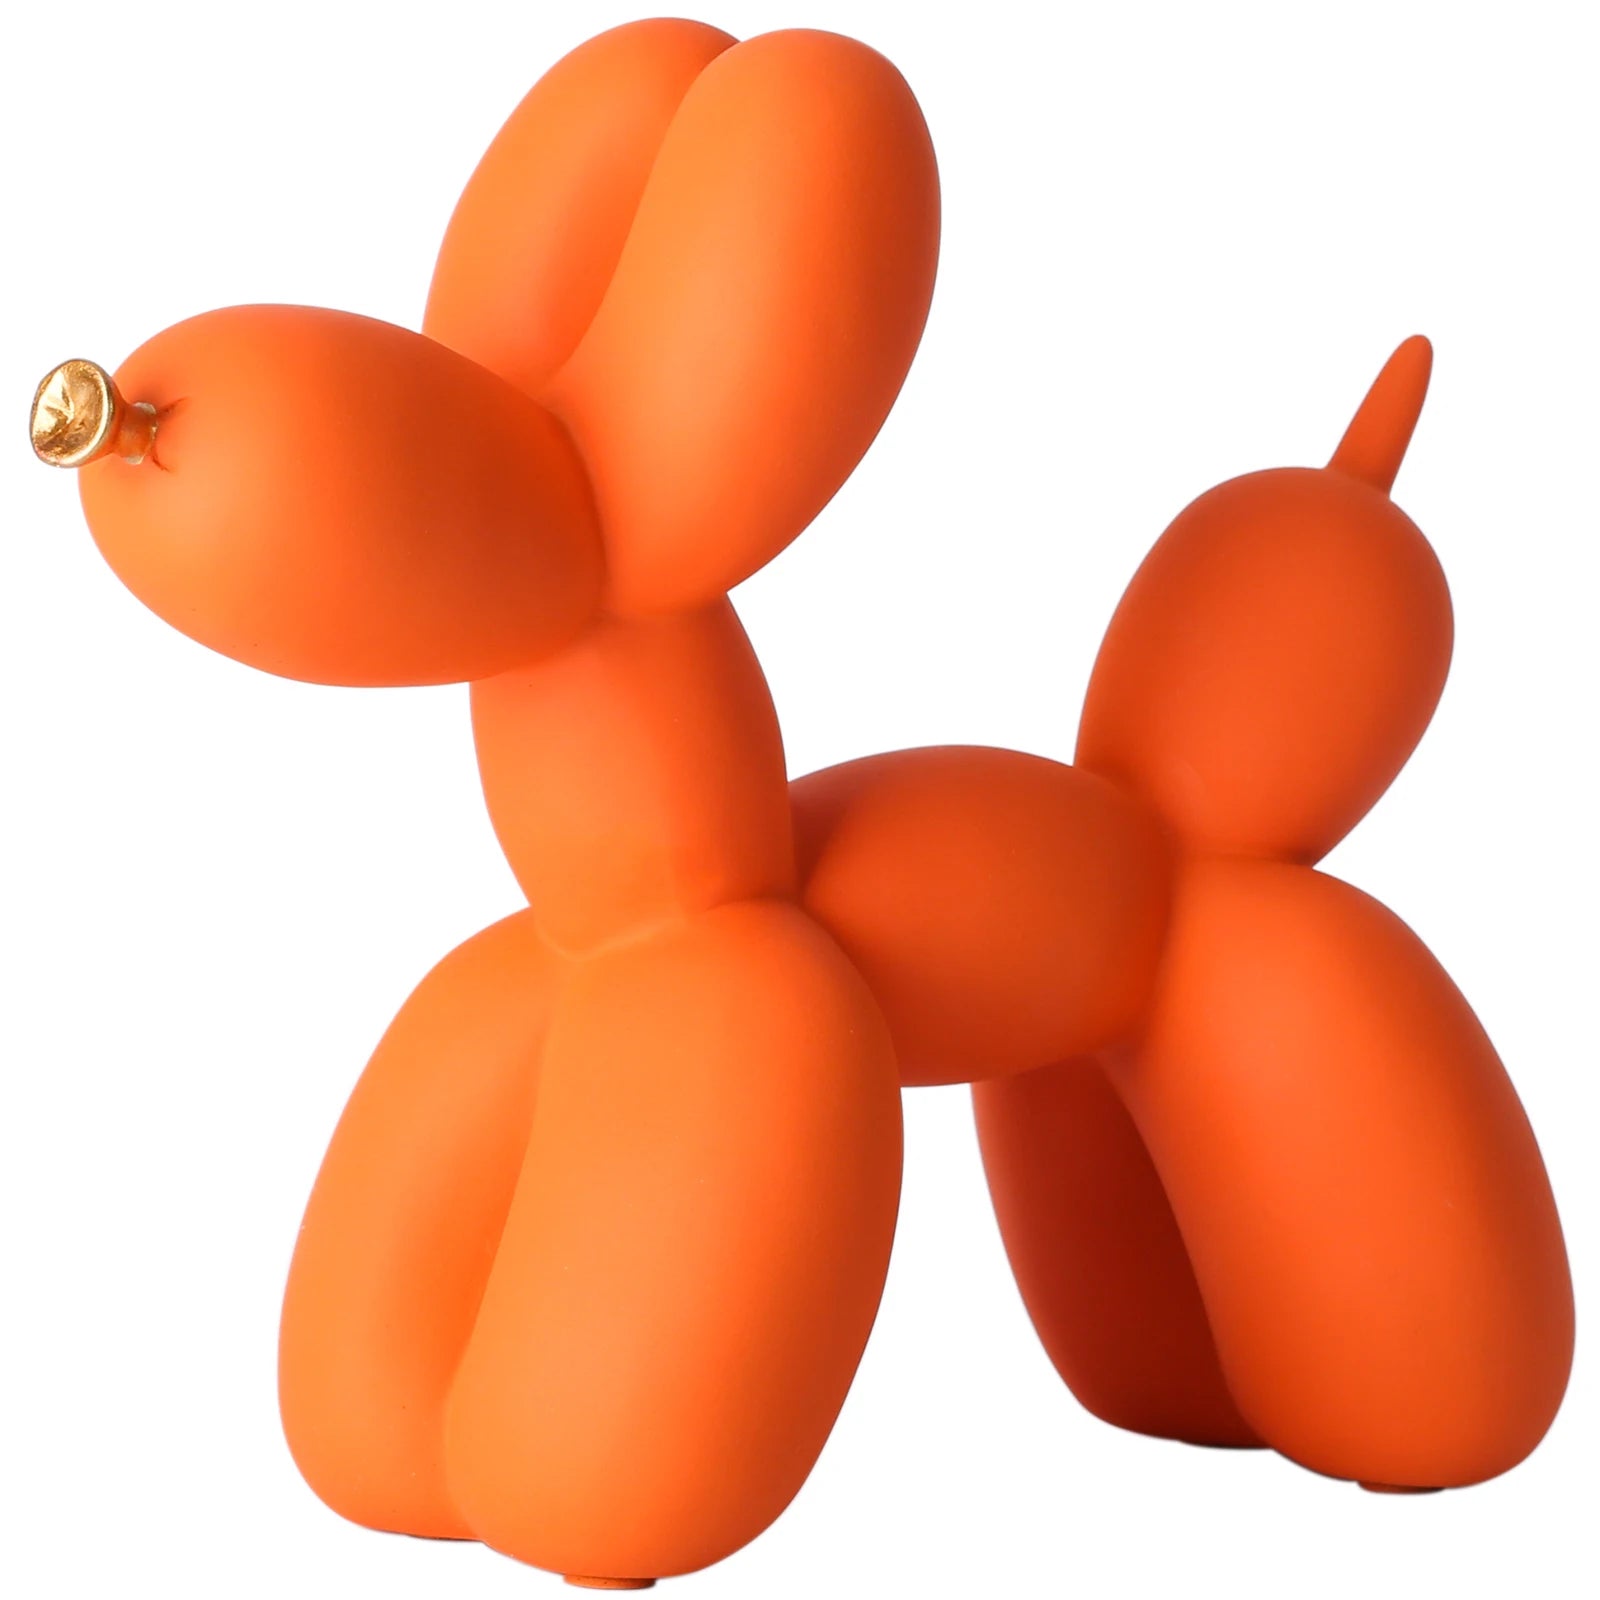 Balloon Dog Statue